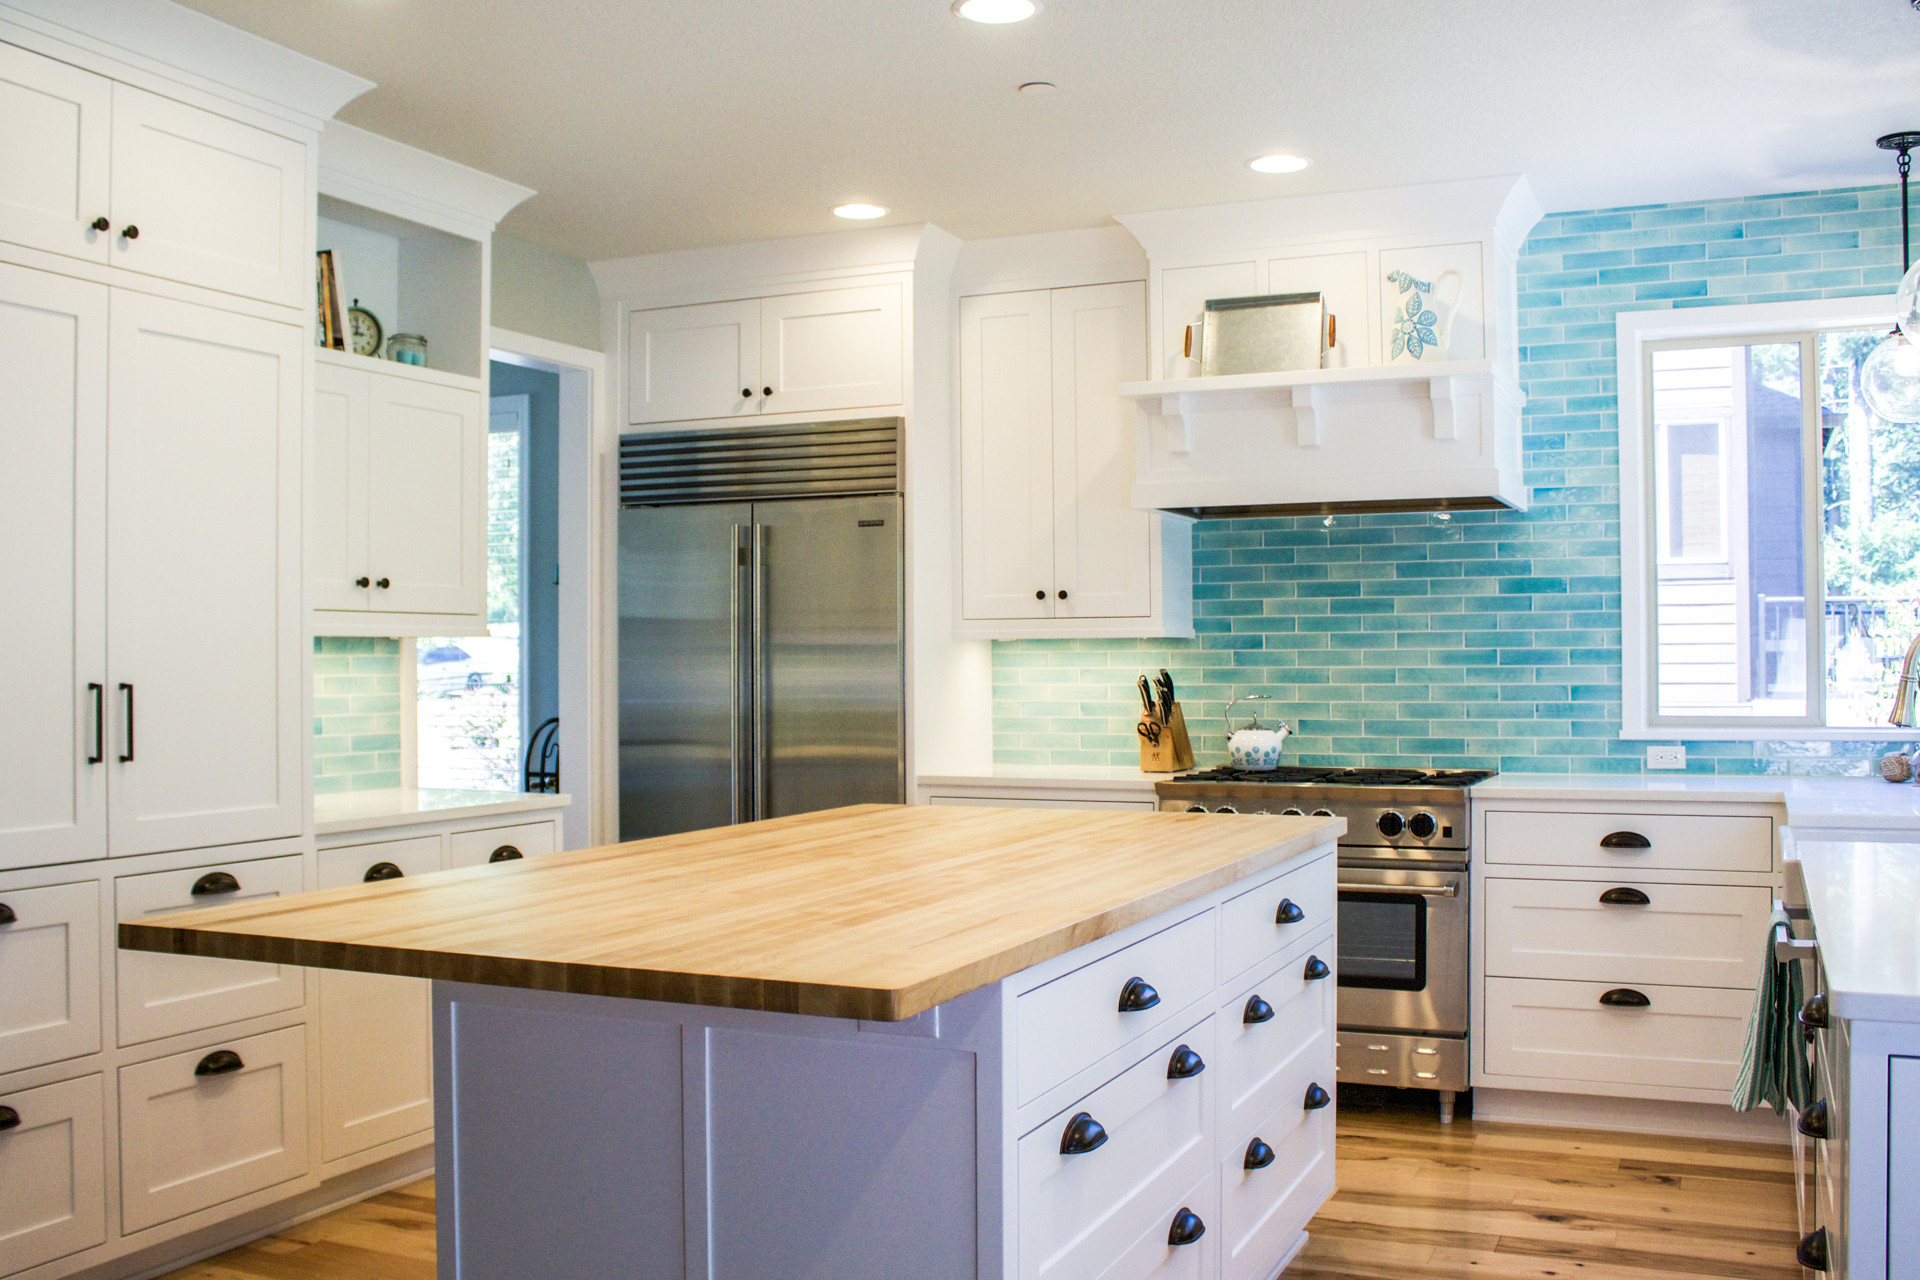 Blue Kitchen Tile Backsplash
 Custom designed kitchen with white cabinets and bold blue